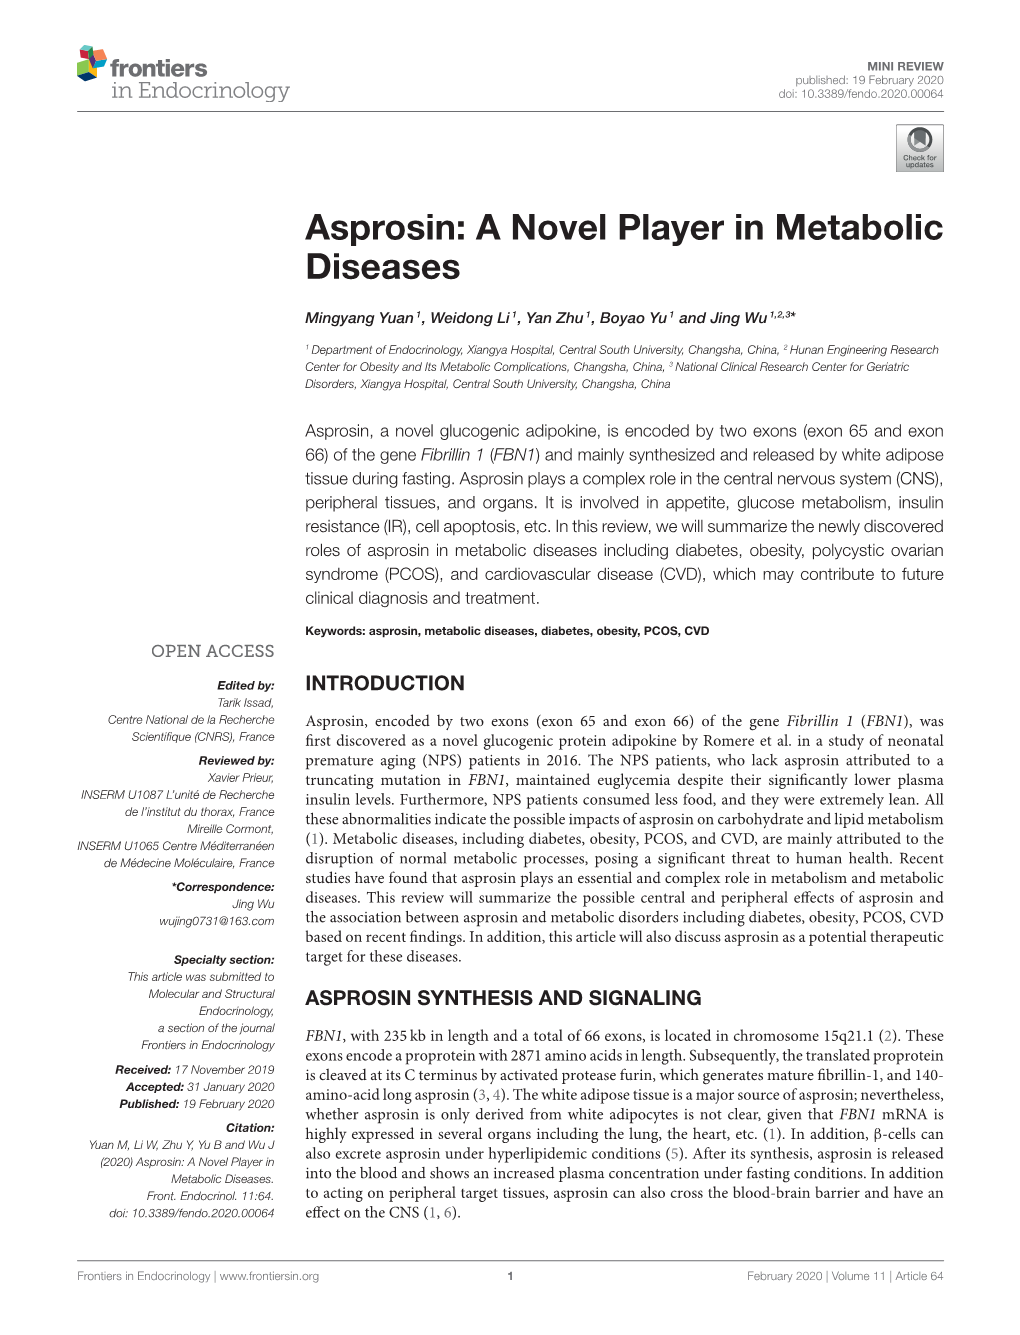 Asprosin: a Novel Player in Metabolic Diseases